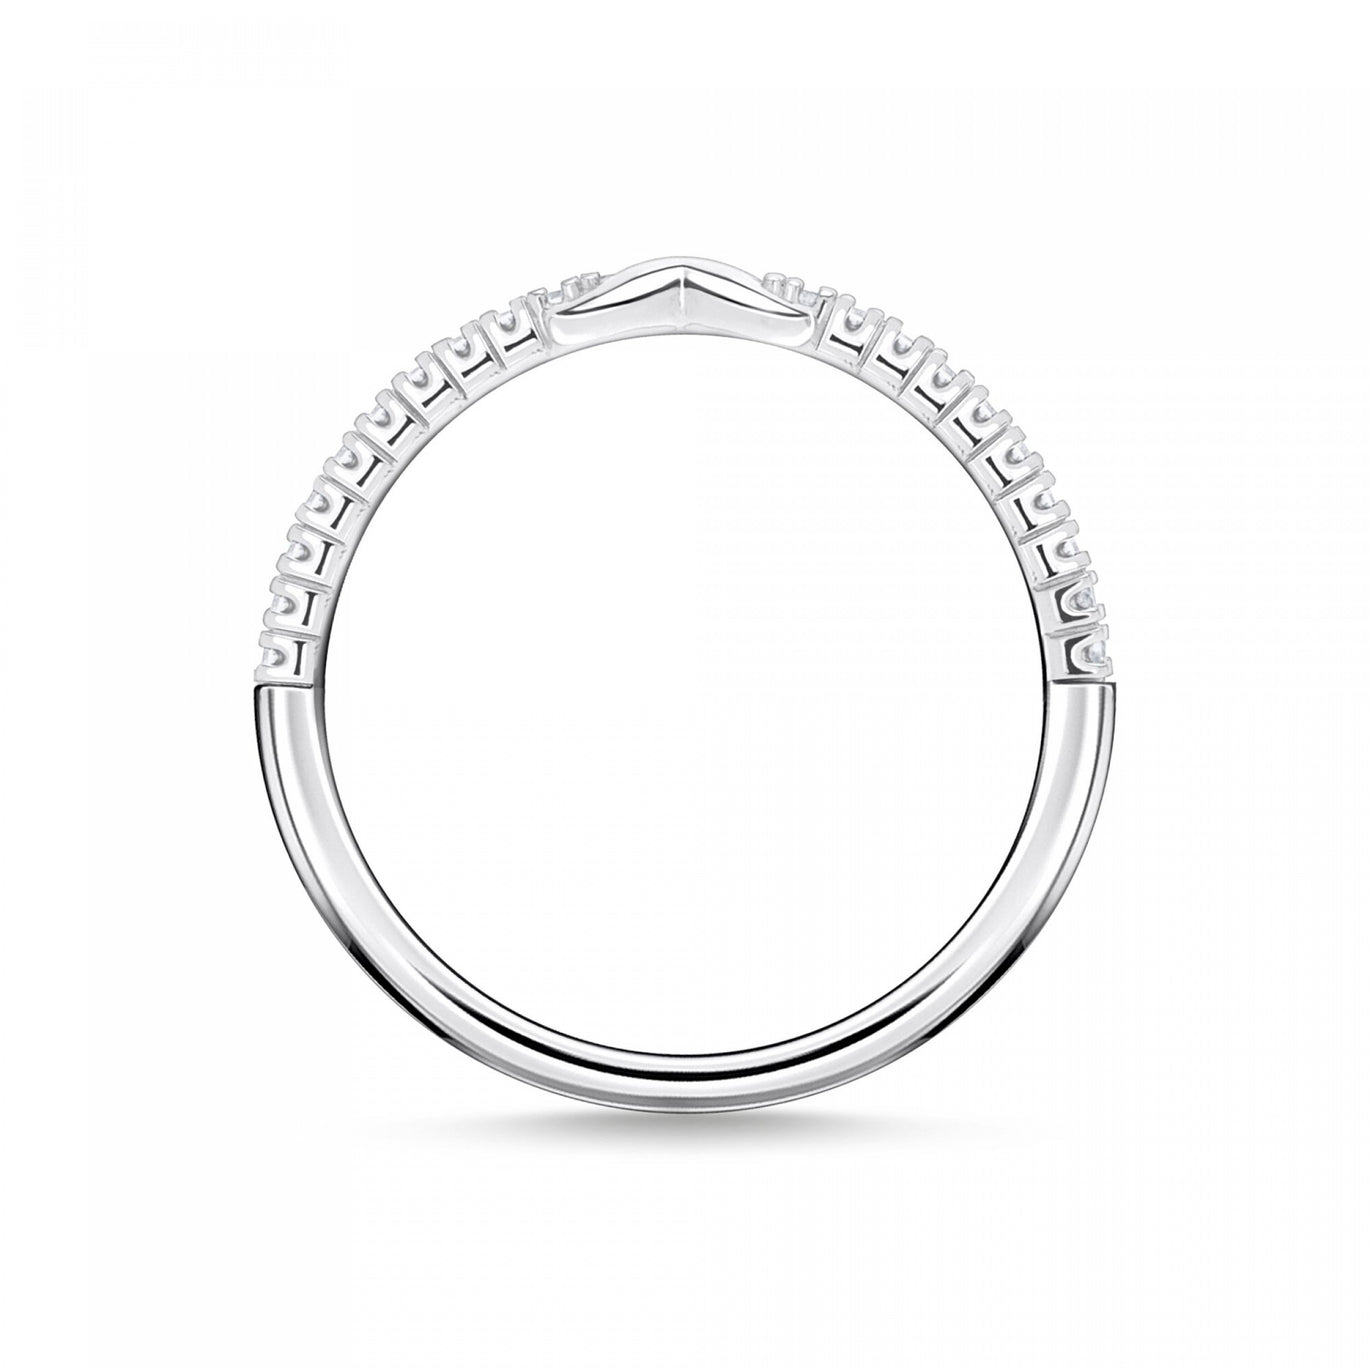 Thomas Sabo Ring Infinity With White Stones Silver